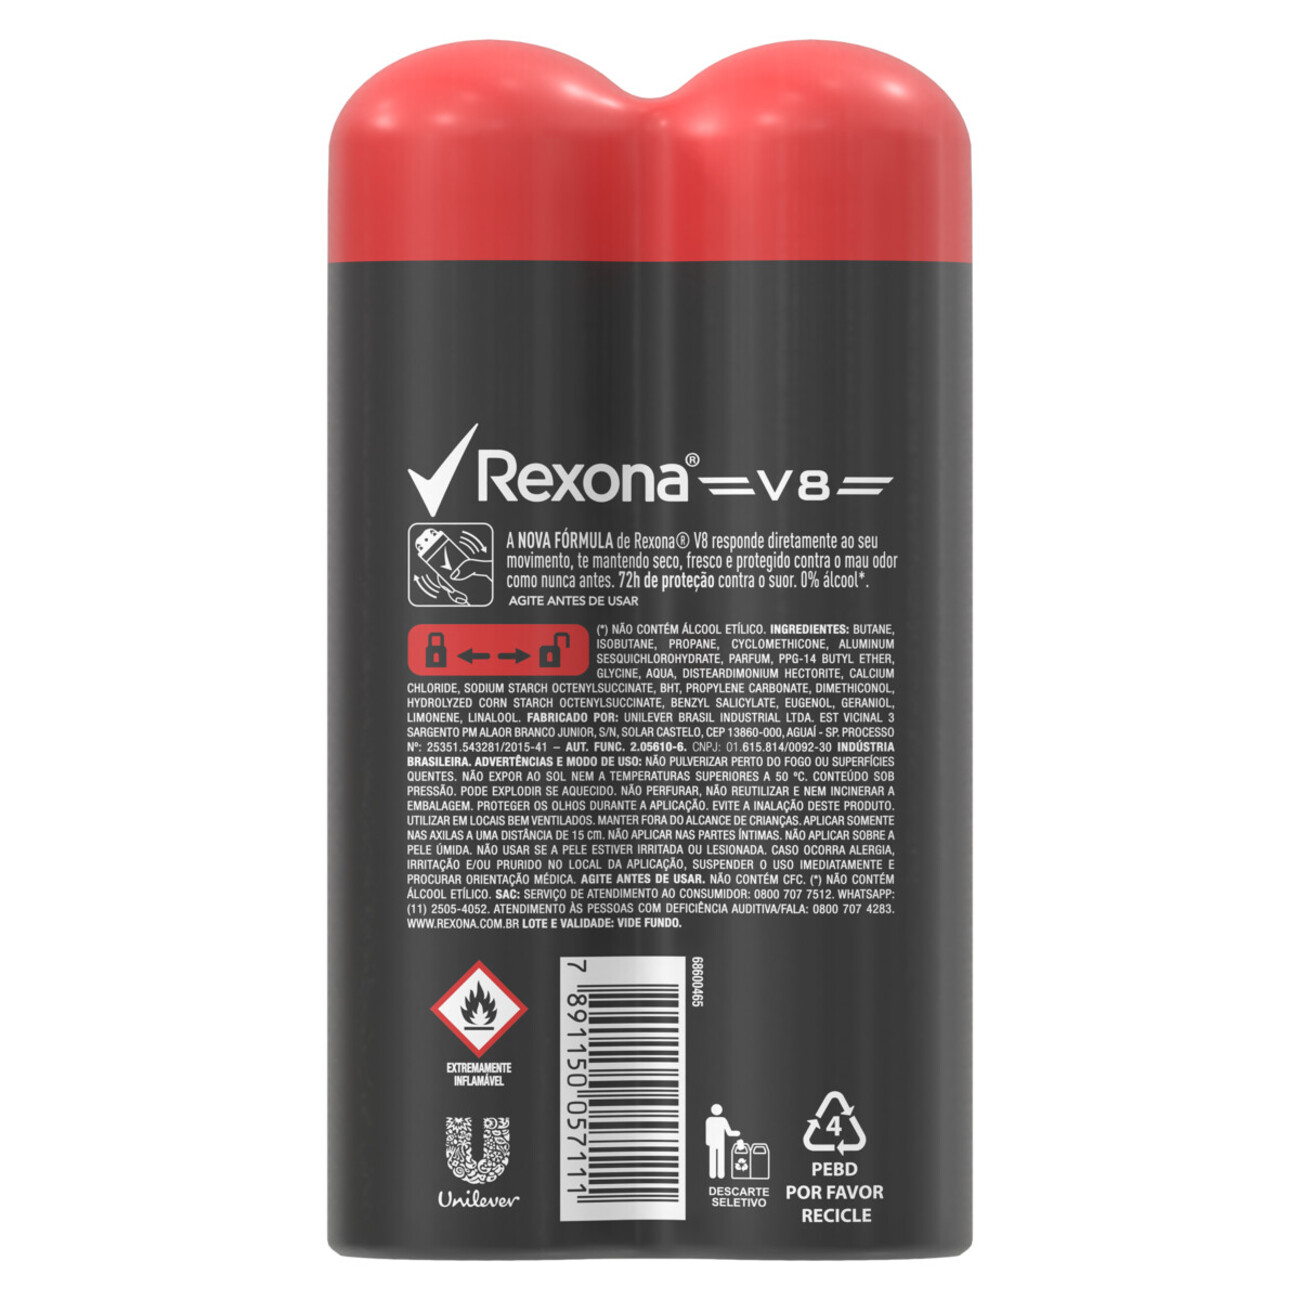 Oferta 2 Desodorantes Antitranspirantes Rexona Men V8 72 horas 150mL